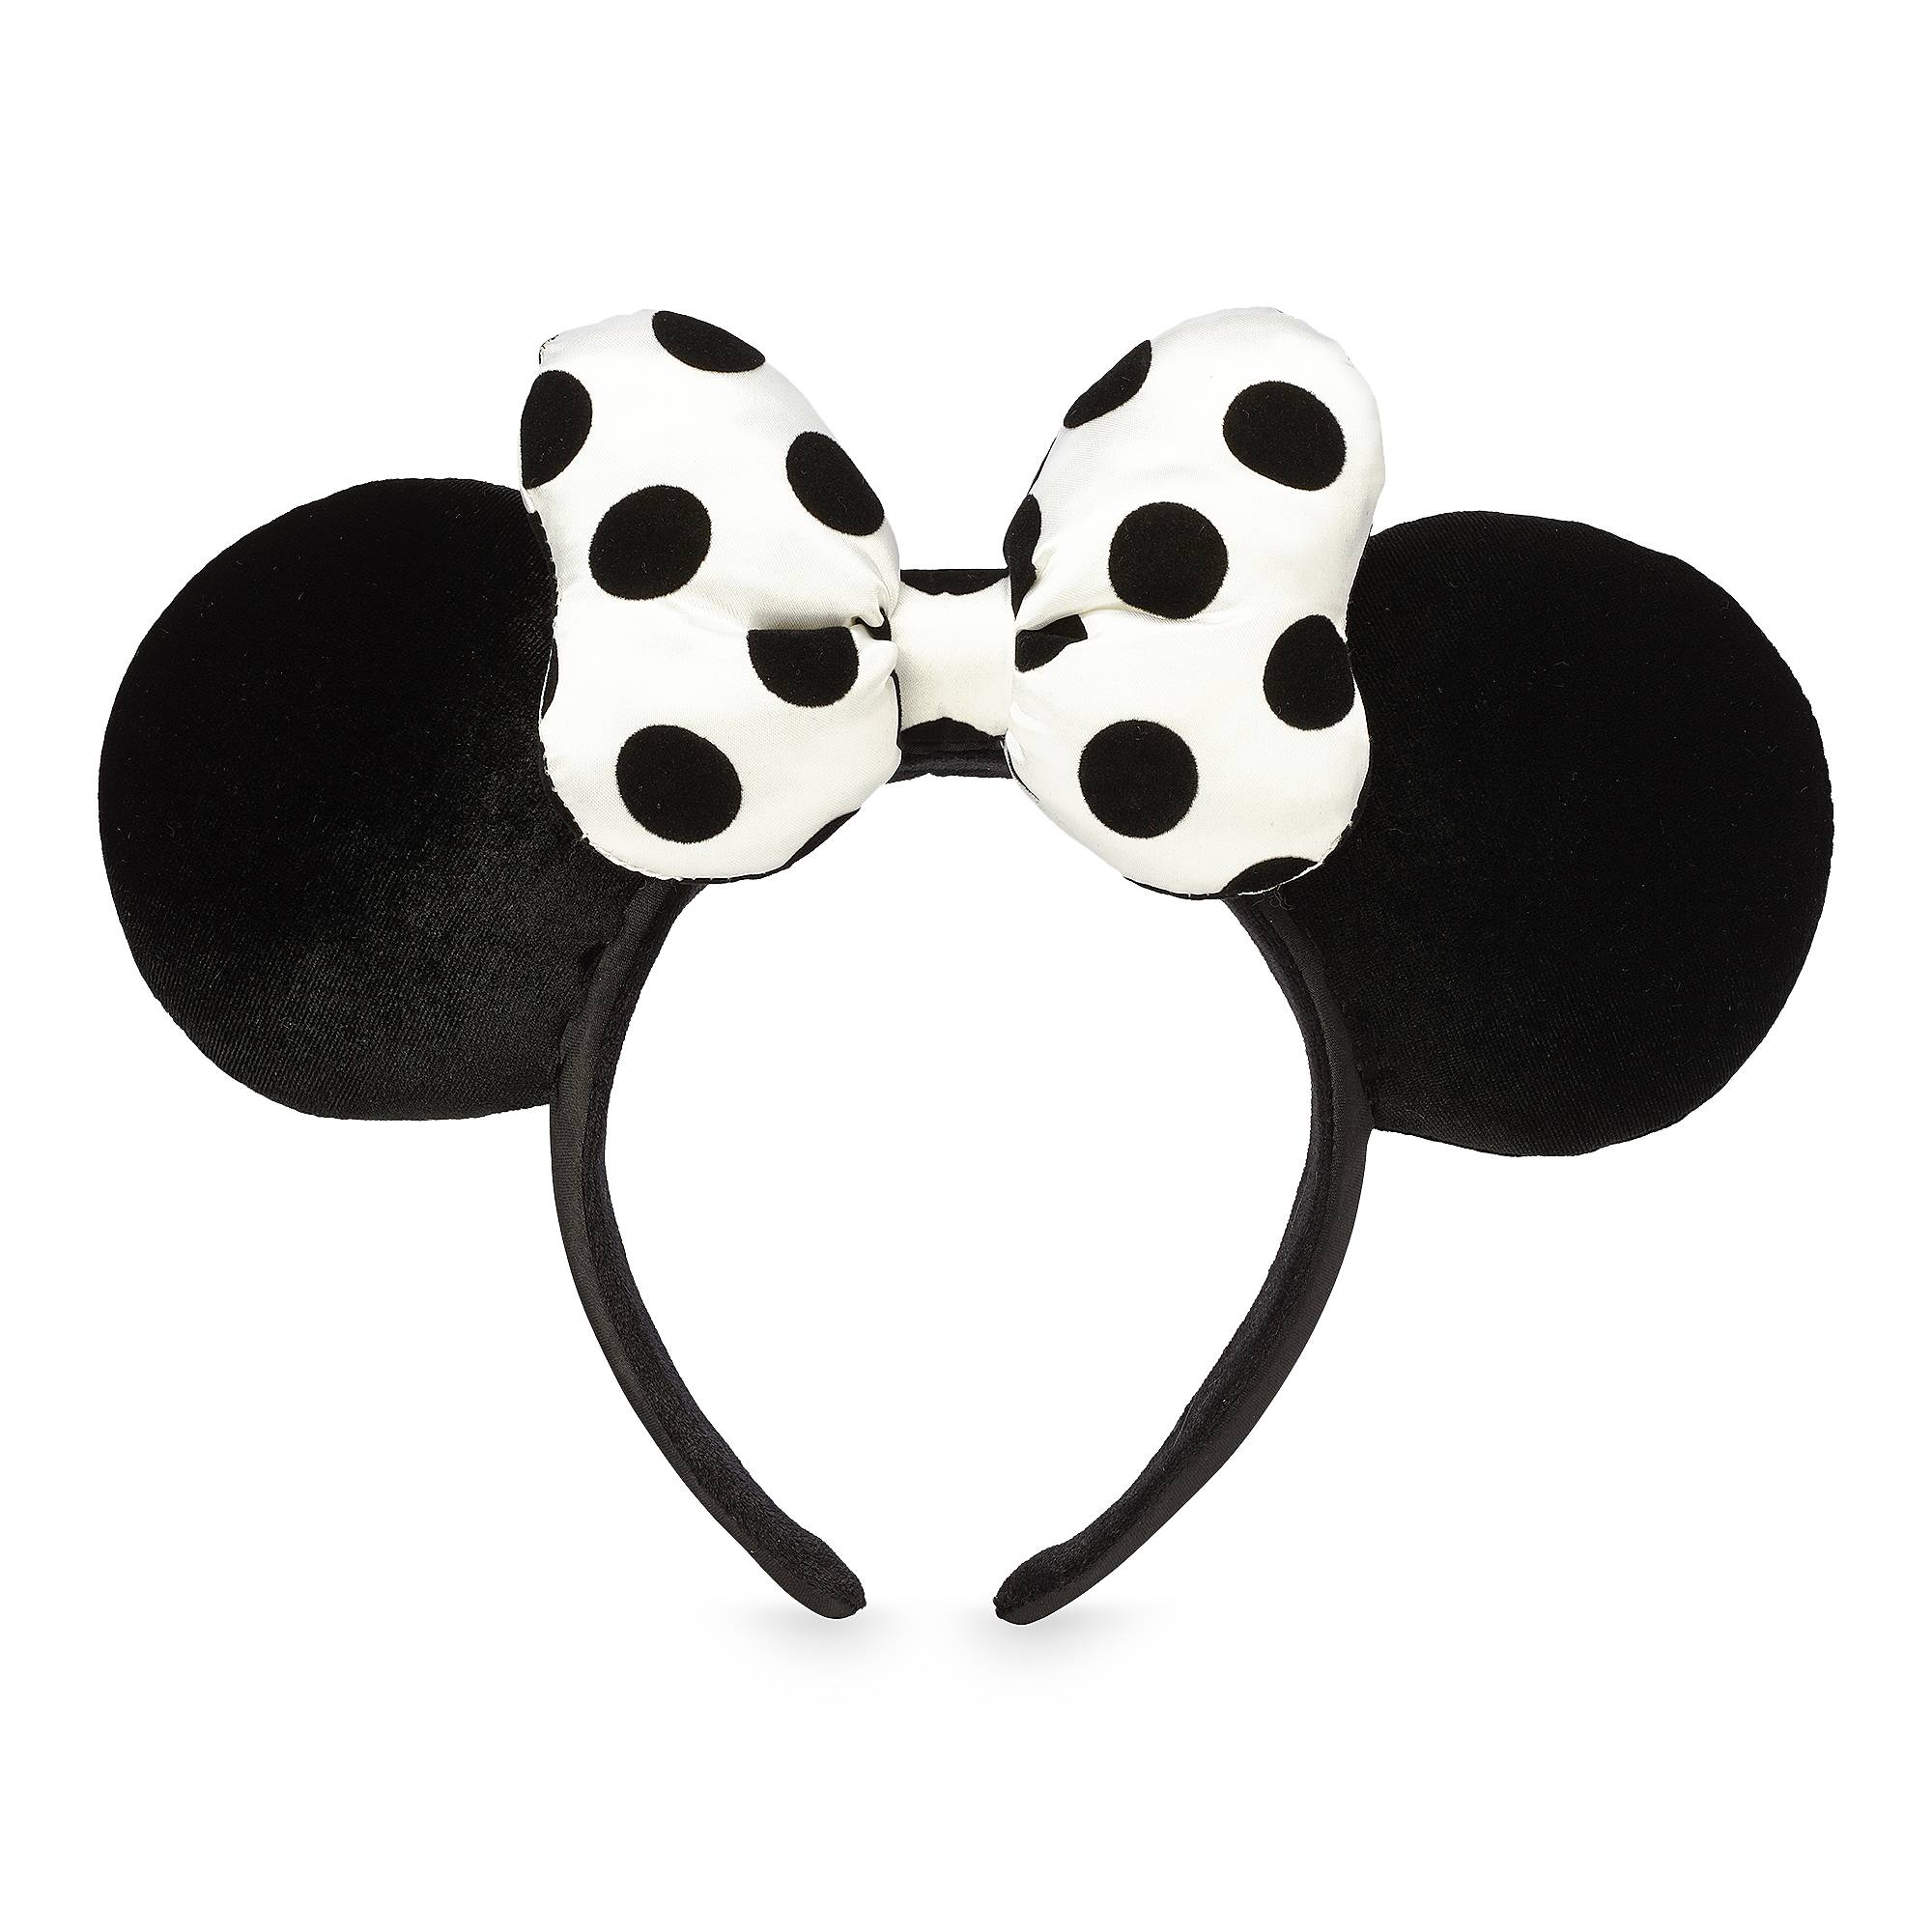 Minnie Mouse Ear Headband with Bow – Black & White Polka Dot image